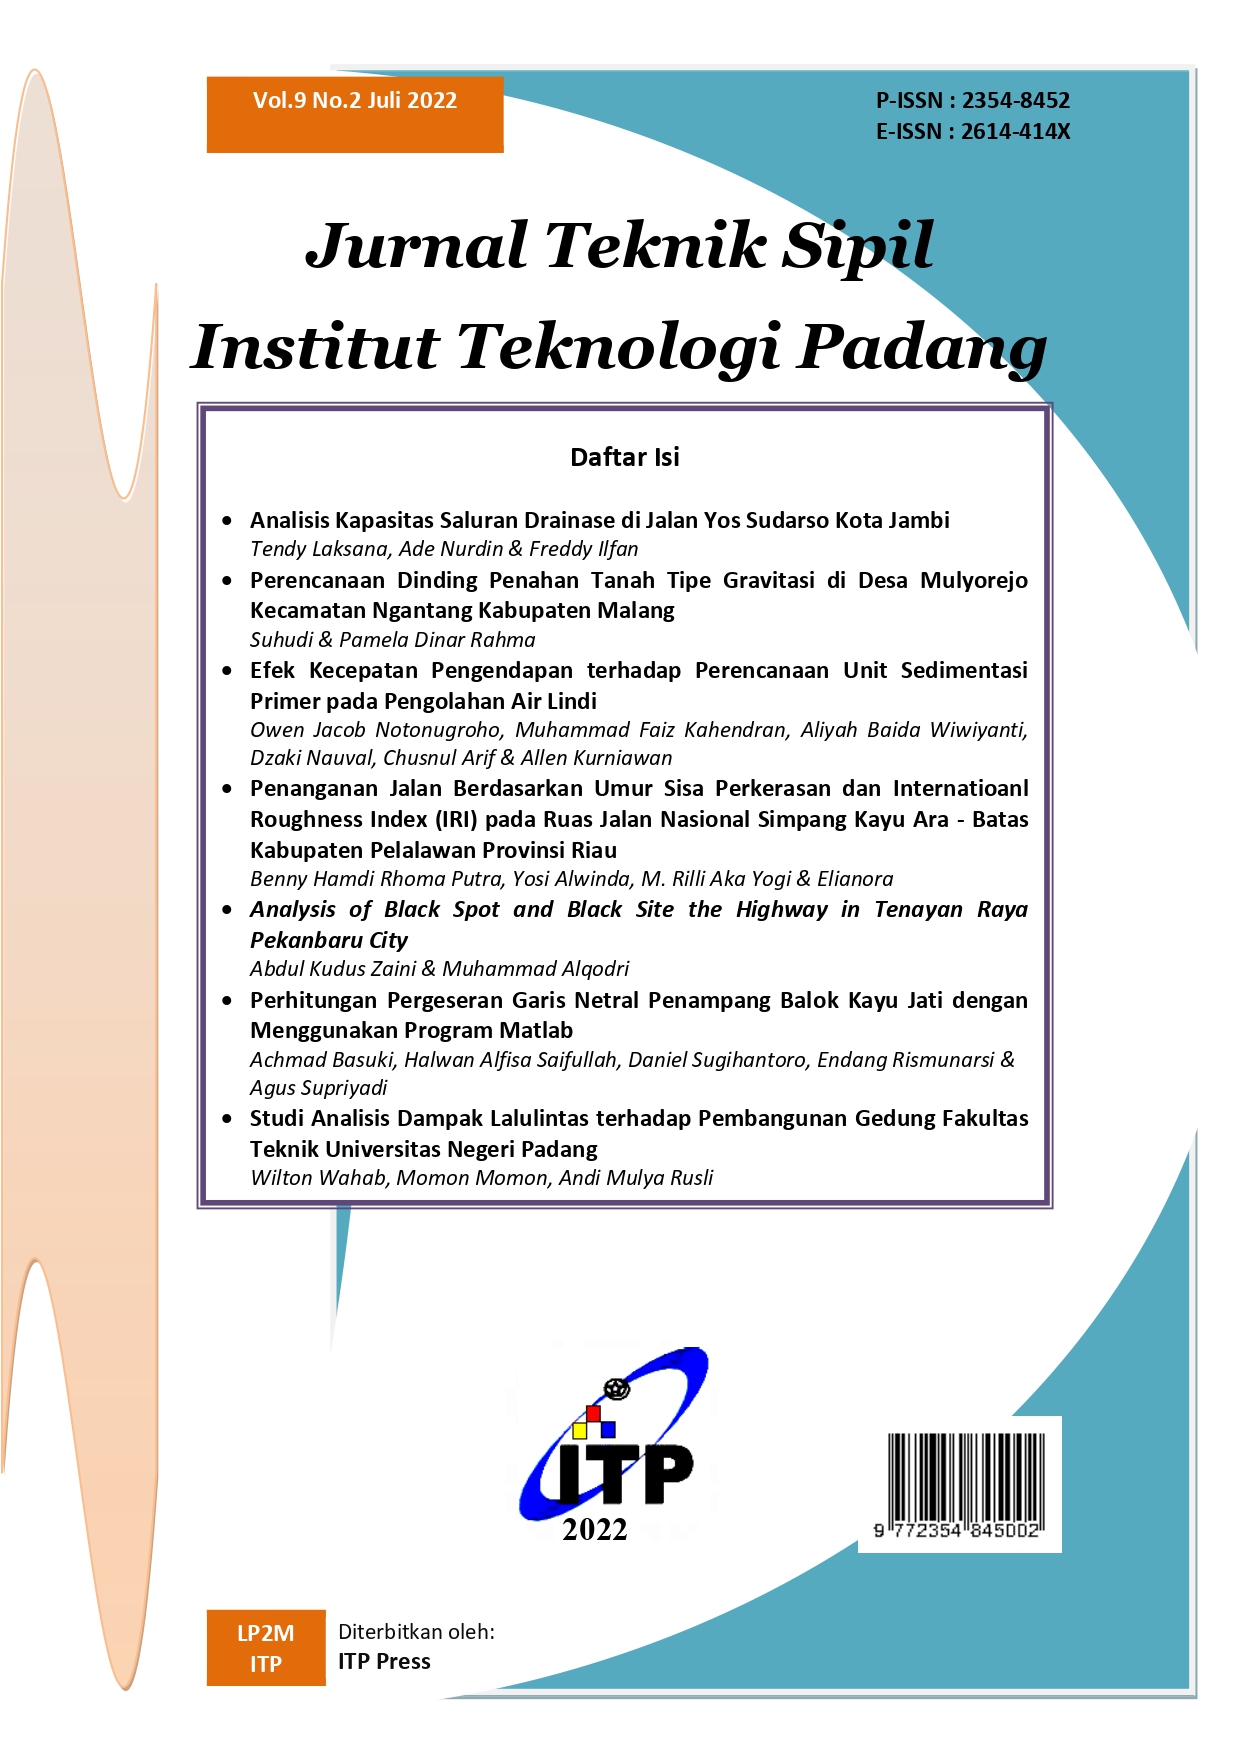 					Lihat Vol 9 No 2 (2022): Jurnal Teknik Sipil ITP (JTS ITP)  
				